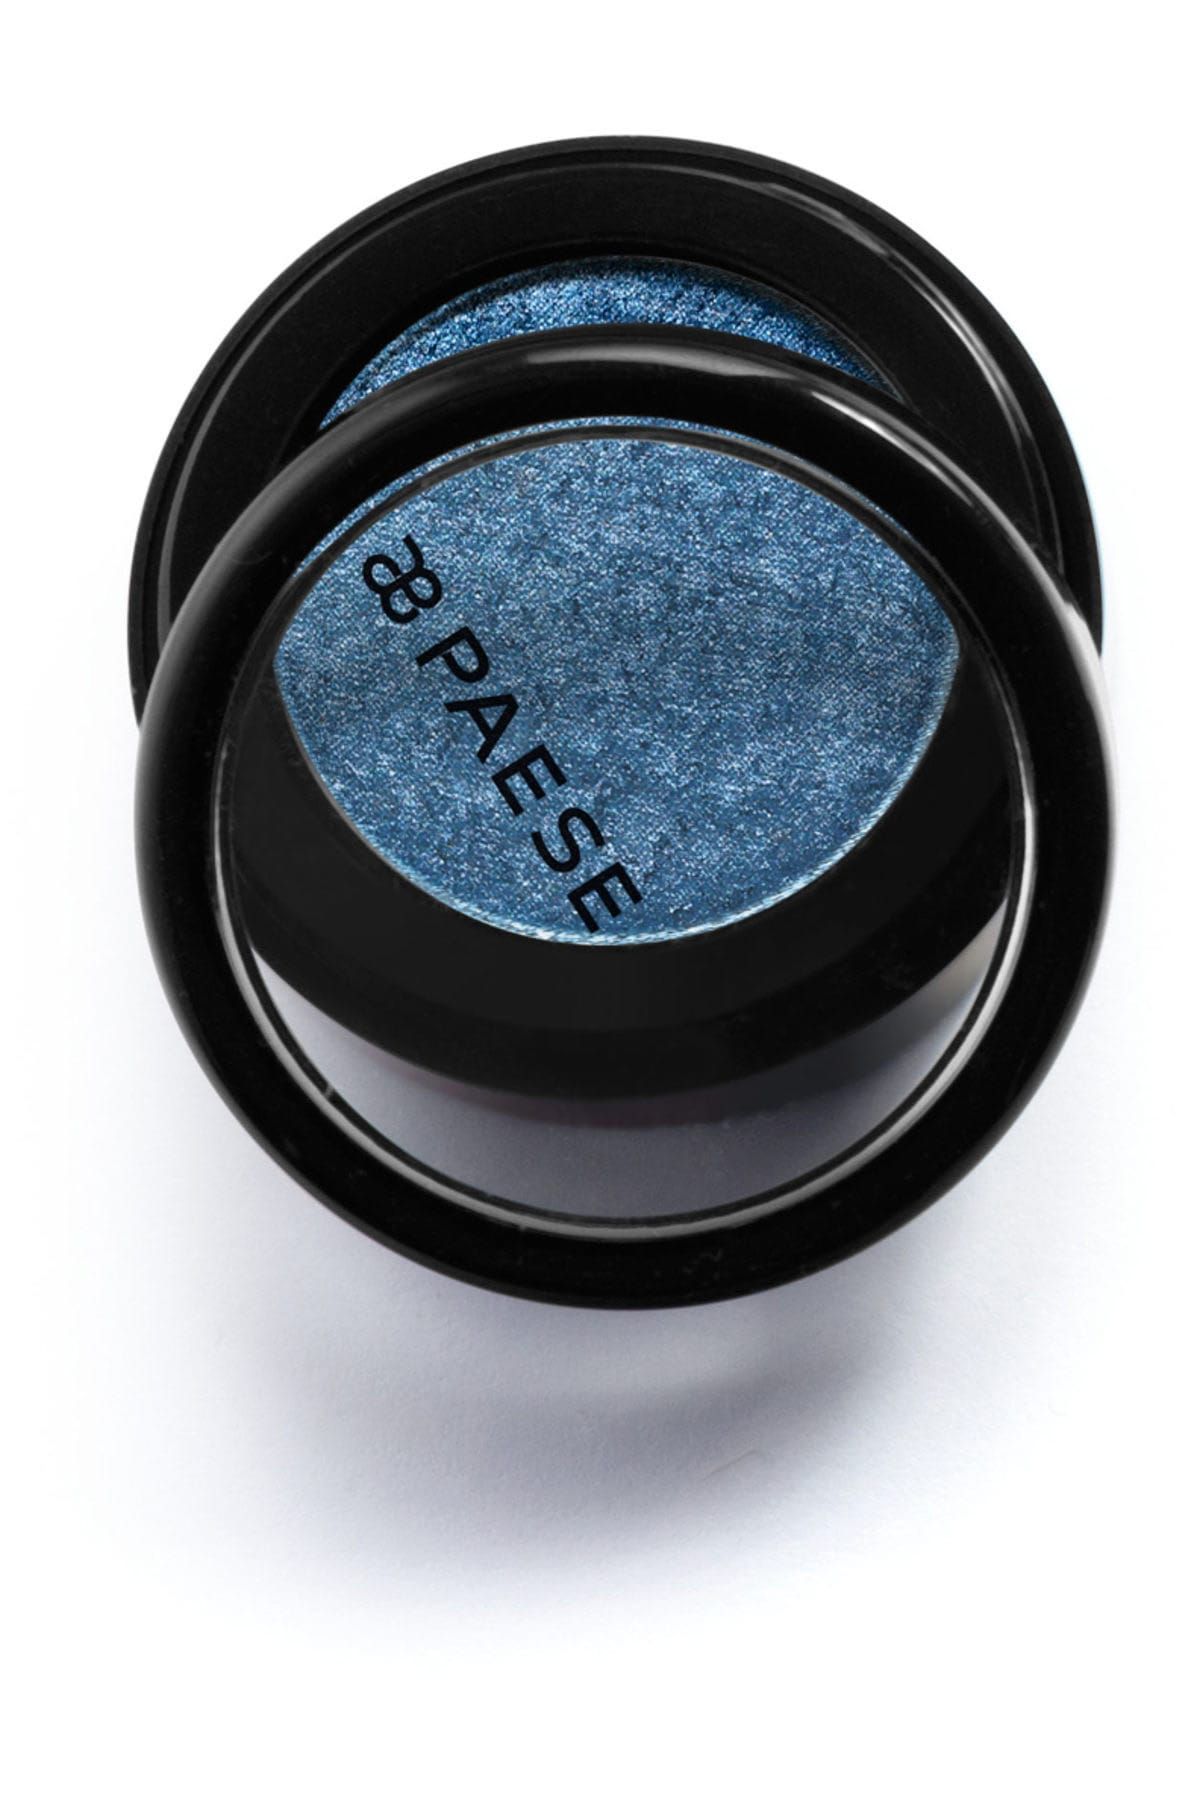 PAESE Göz Farı - Eyeshadow Foil Effect 315 Sapphire 3 g 5902627611698